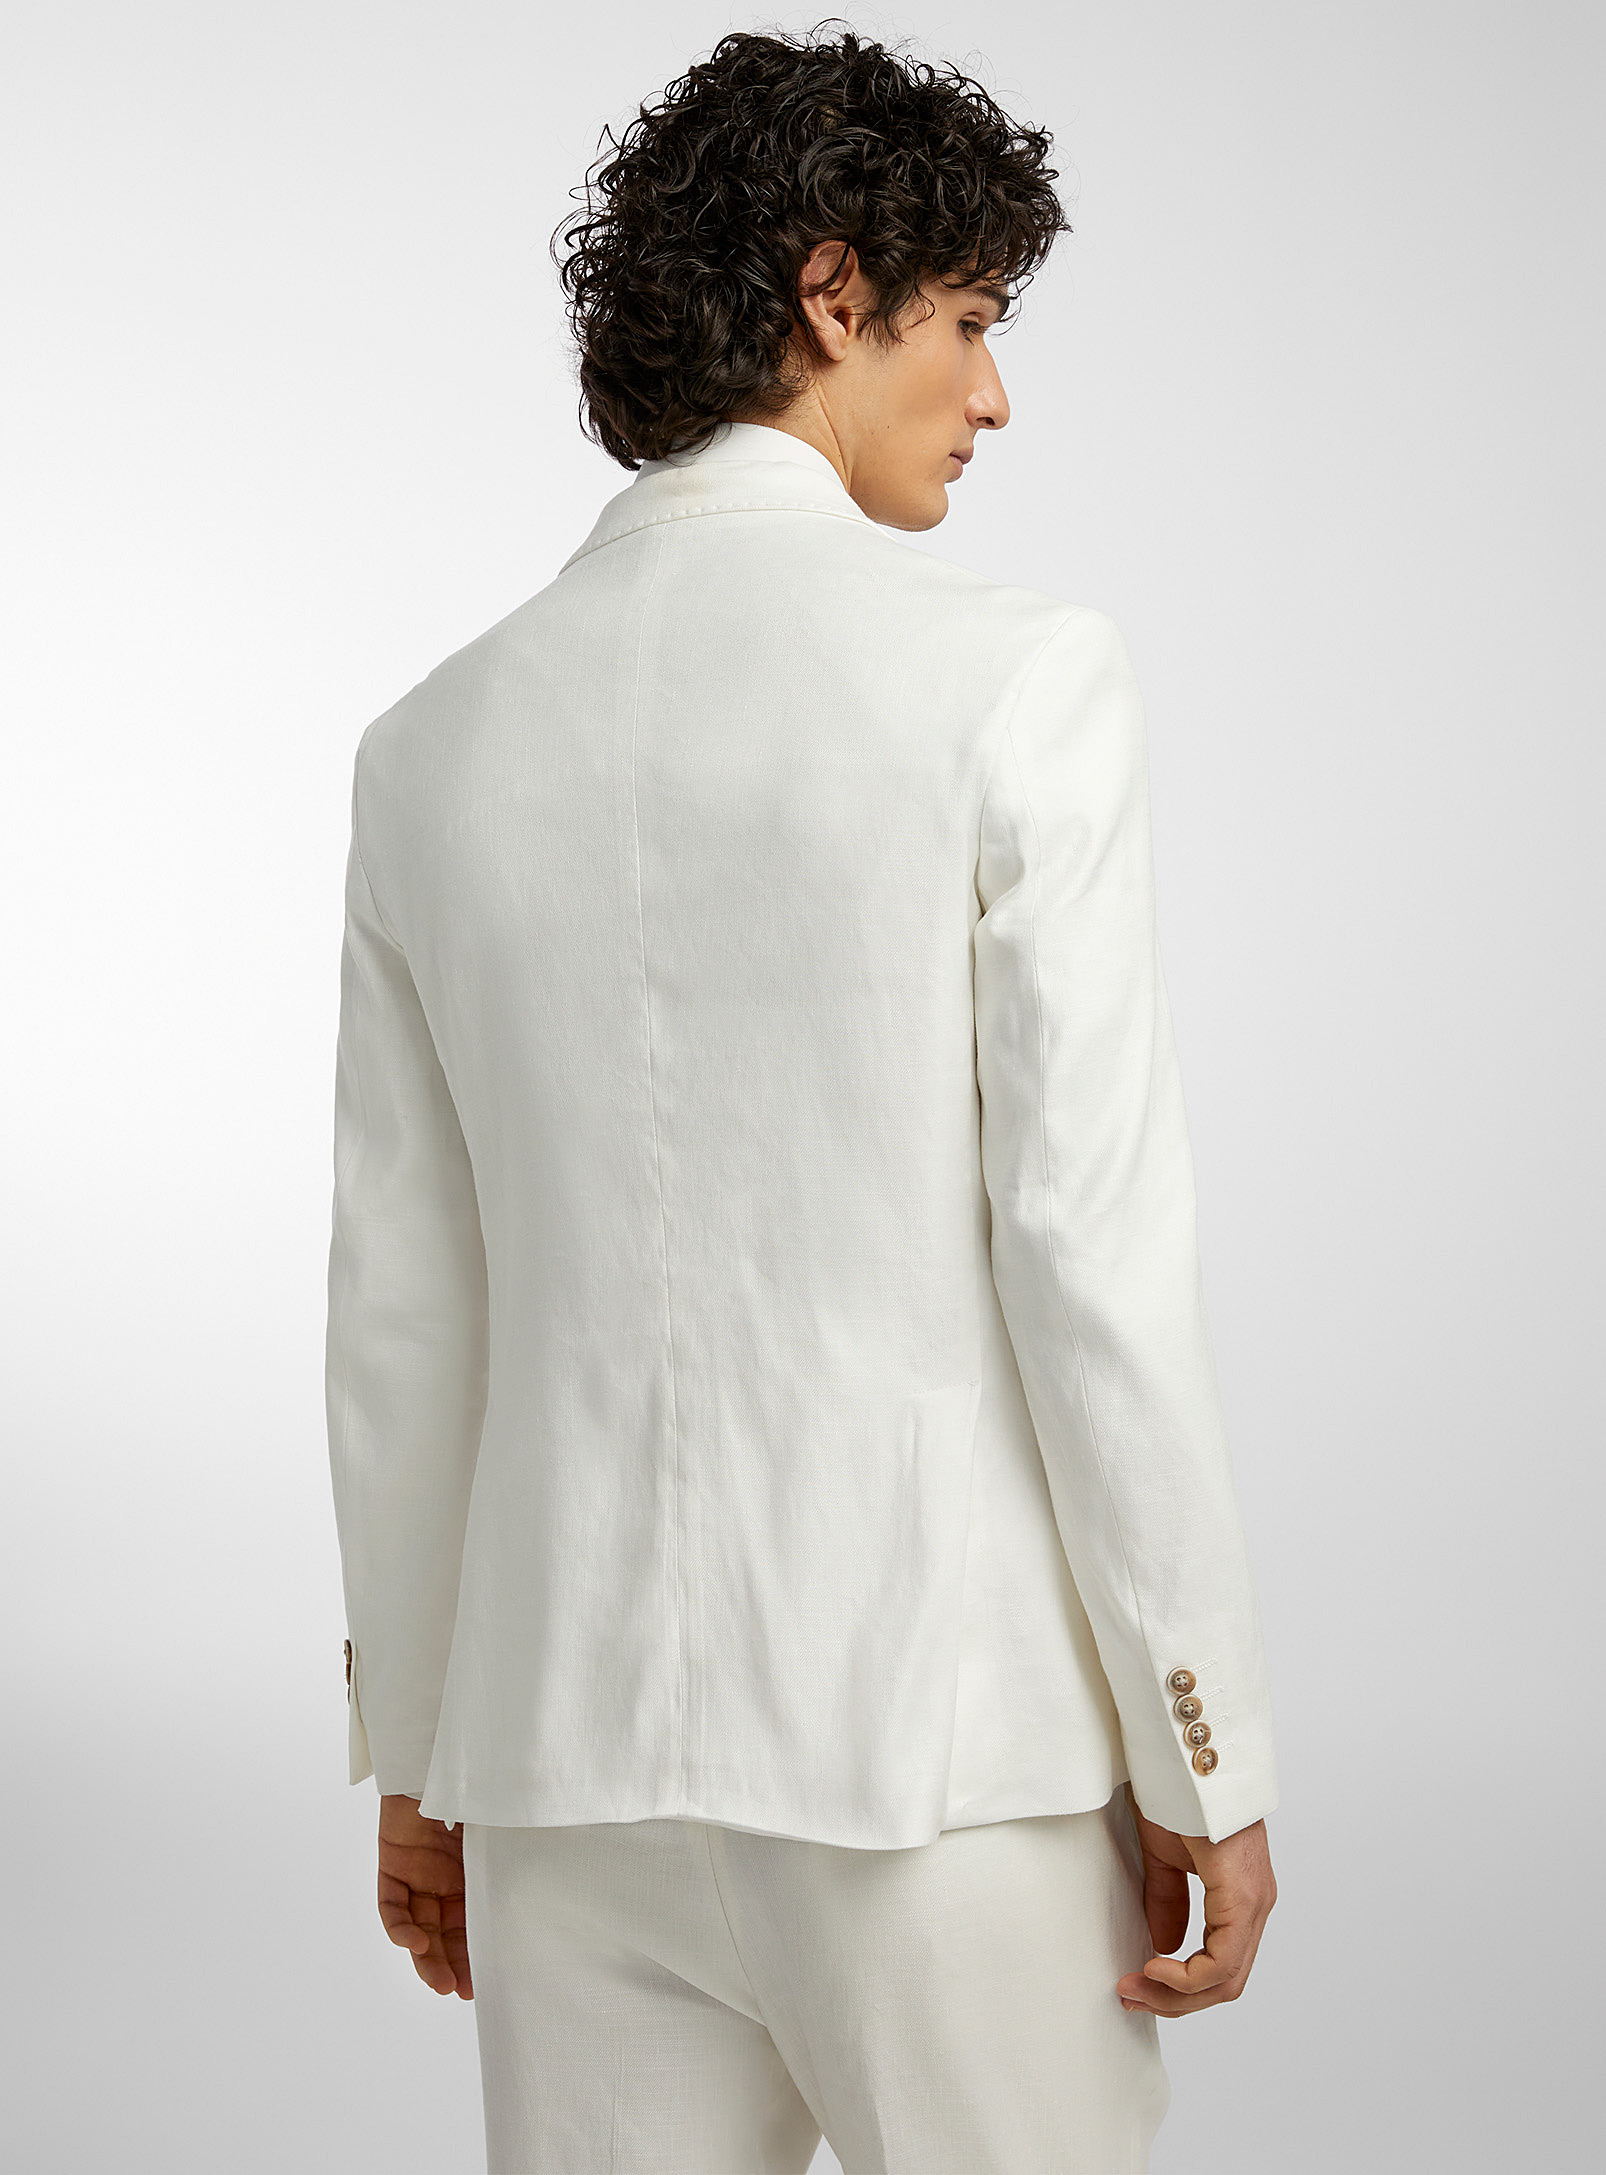 Gianni Lupo - Le veston blanc surpiqûres ton sur